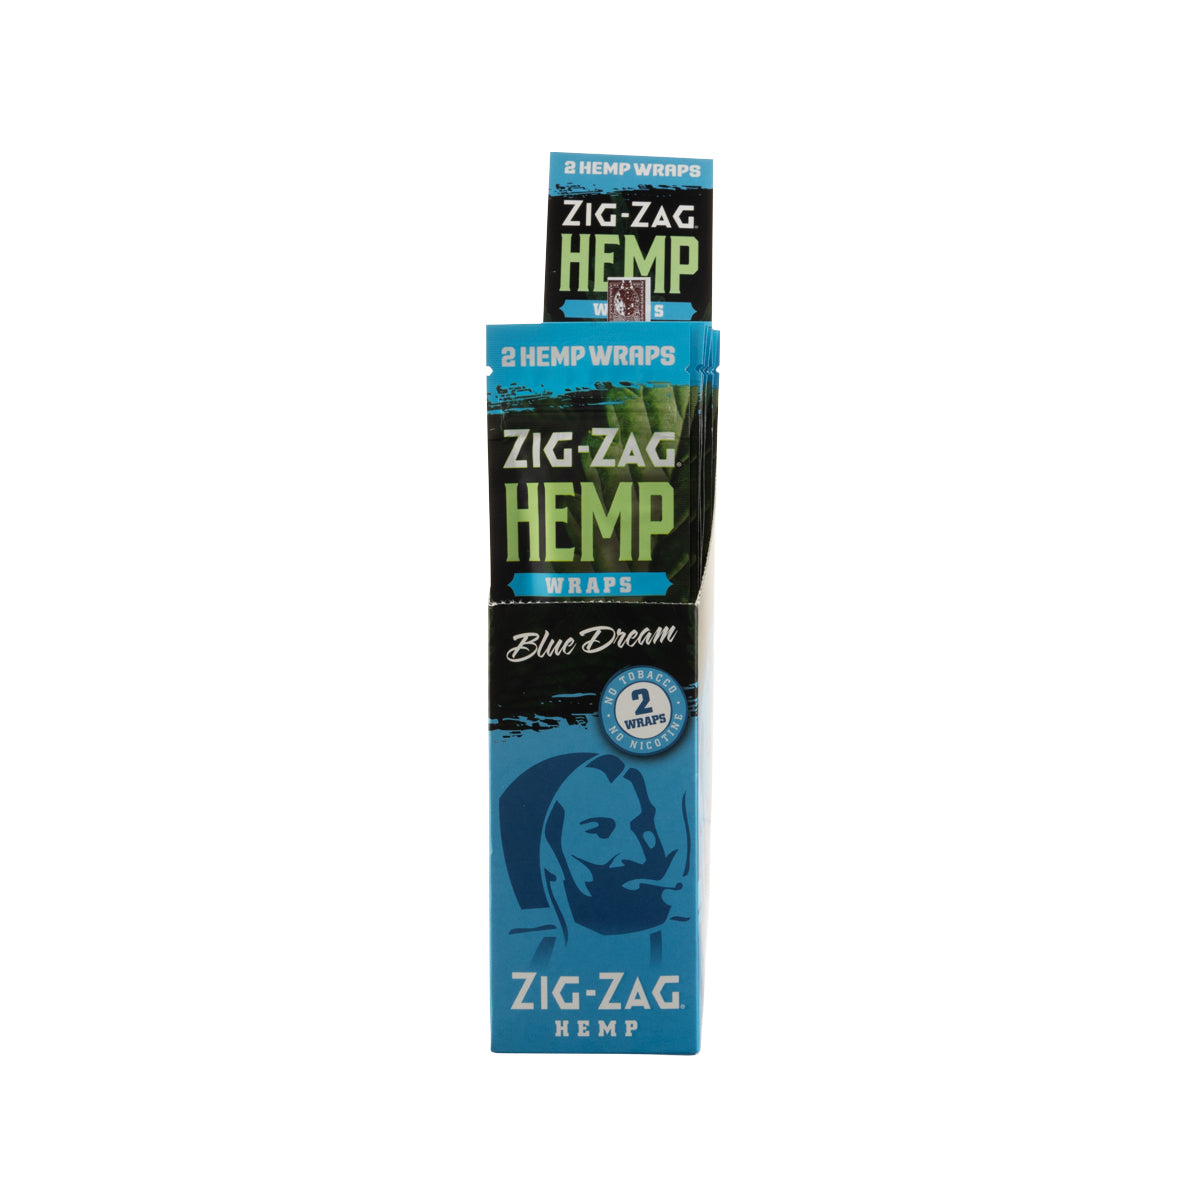 Zig Zag Hemp Wraps -  Blue Dream - 25 Pack Box